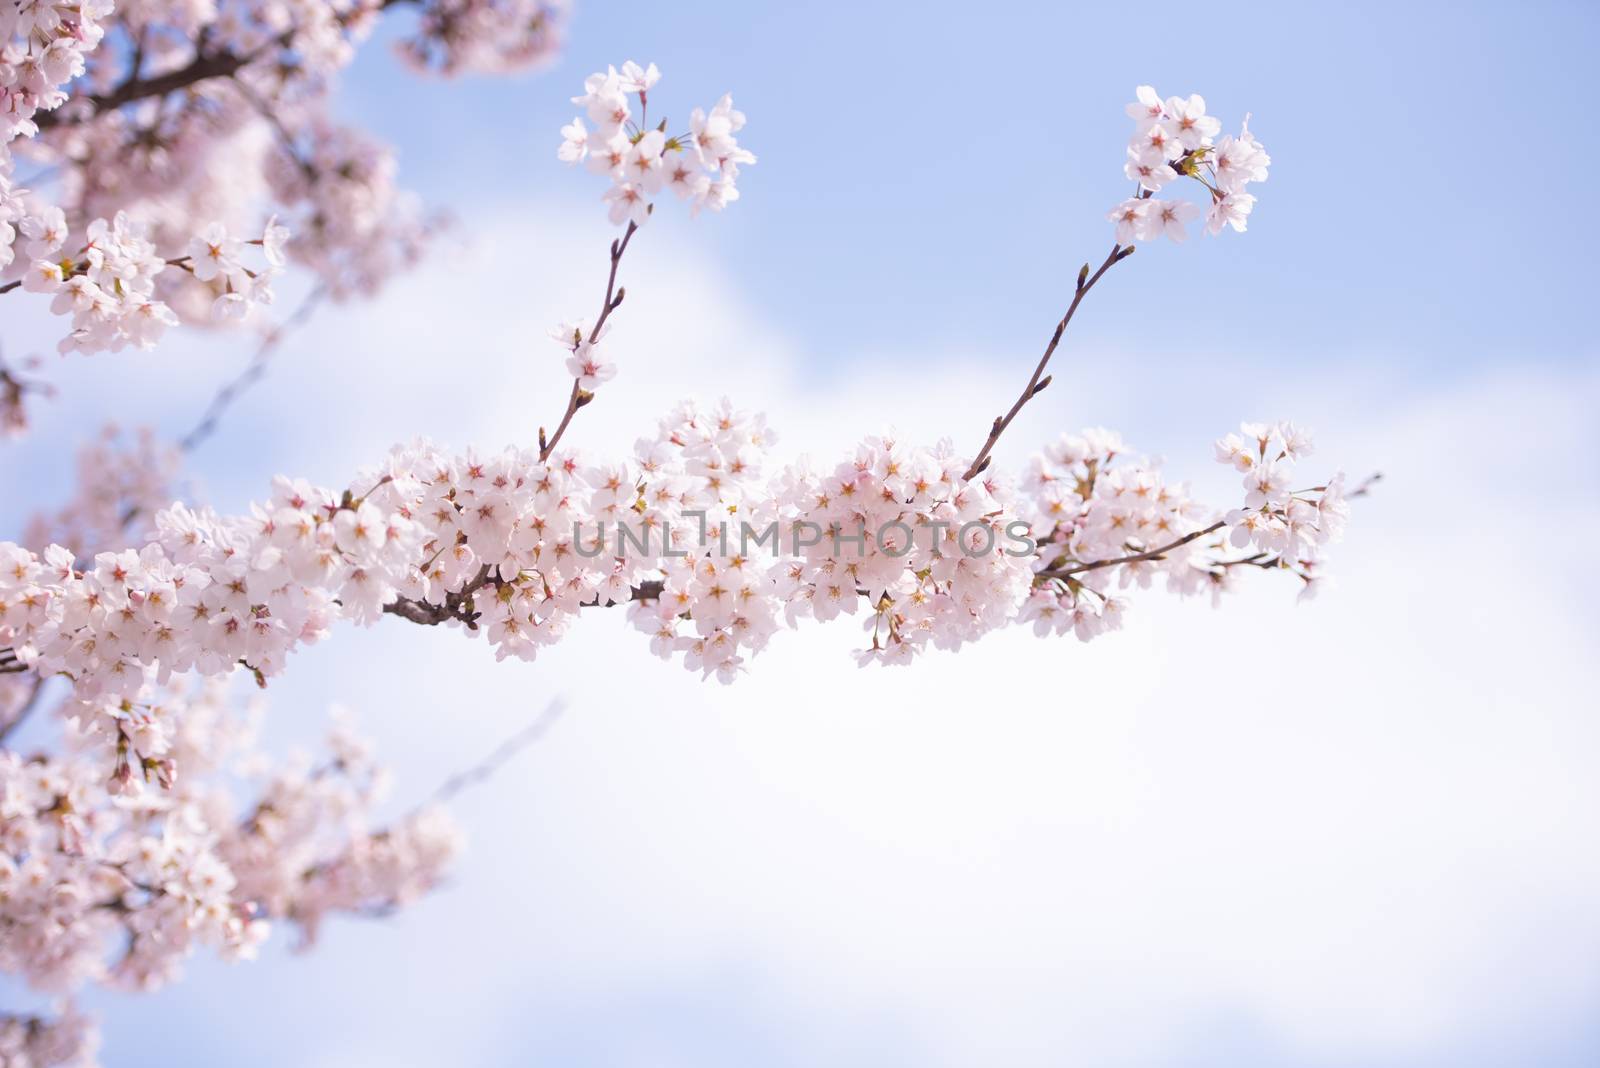 Cherry Blossom in spring with Soft focus, Sakura season in korea,Background. by wijitamkapet@gmail.com